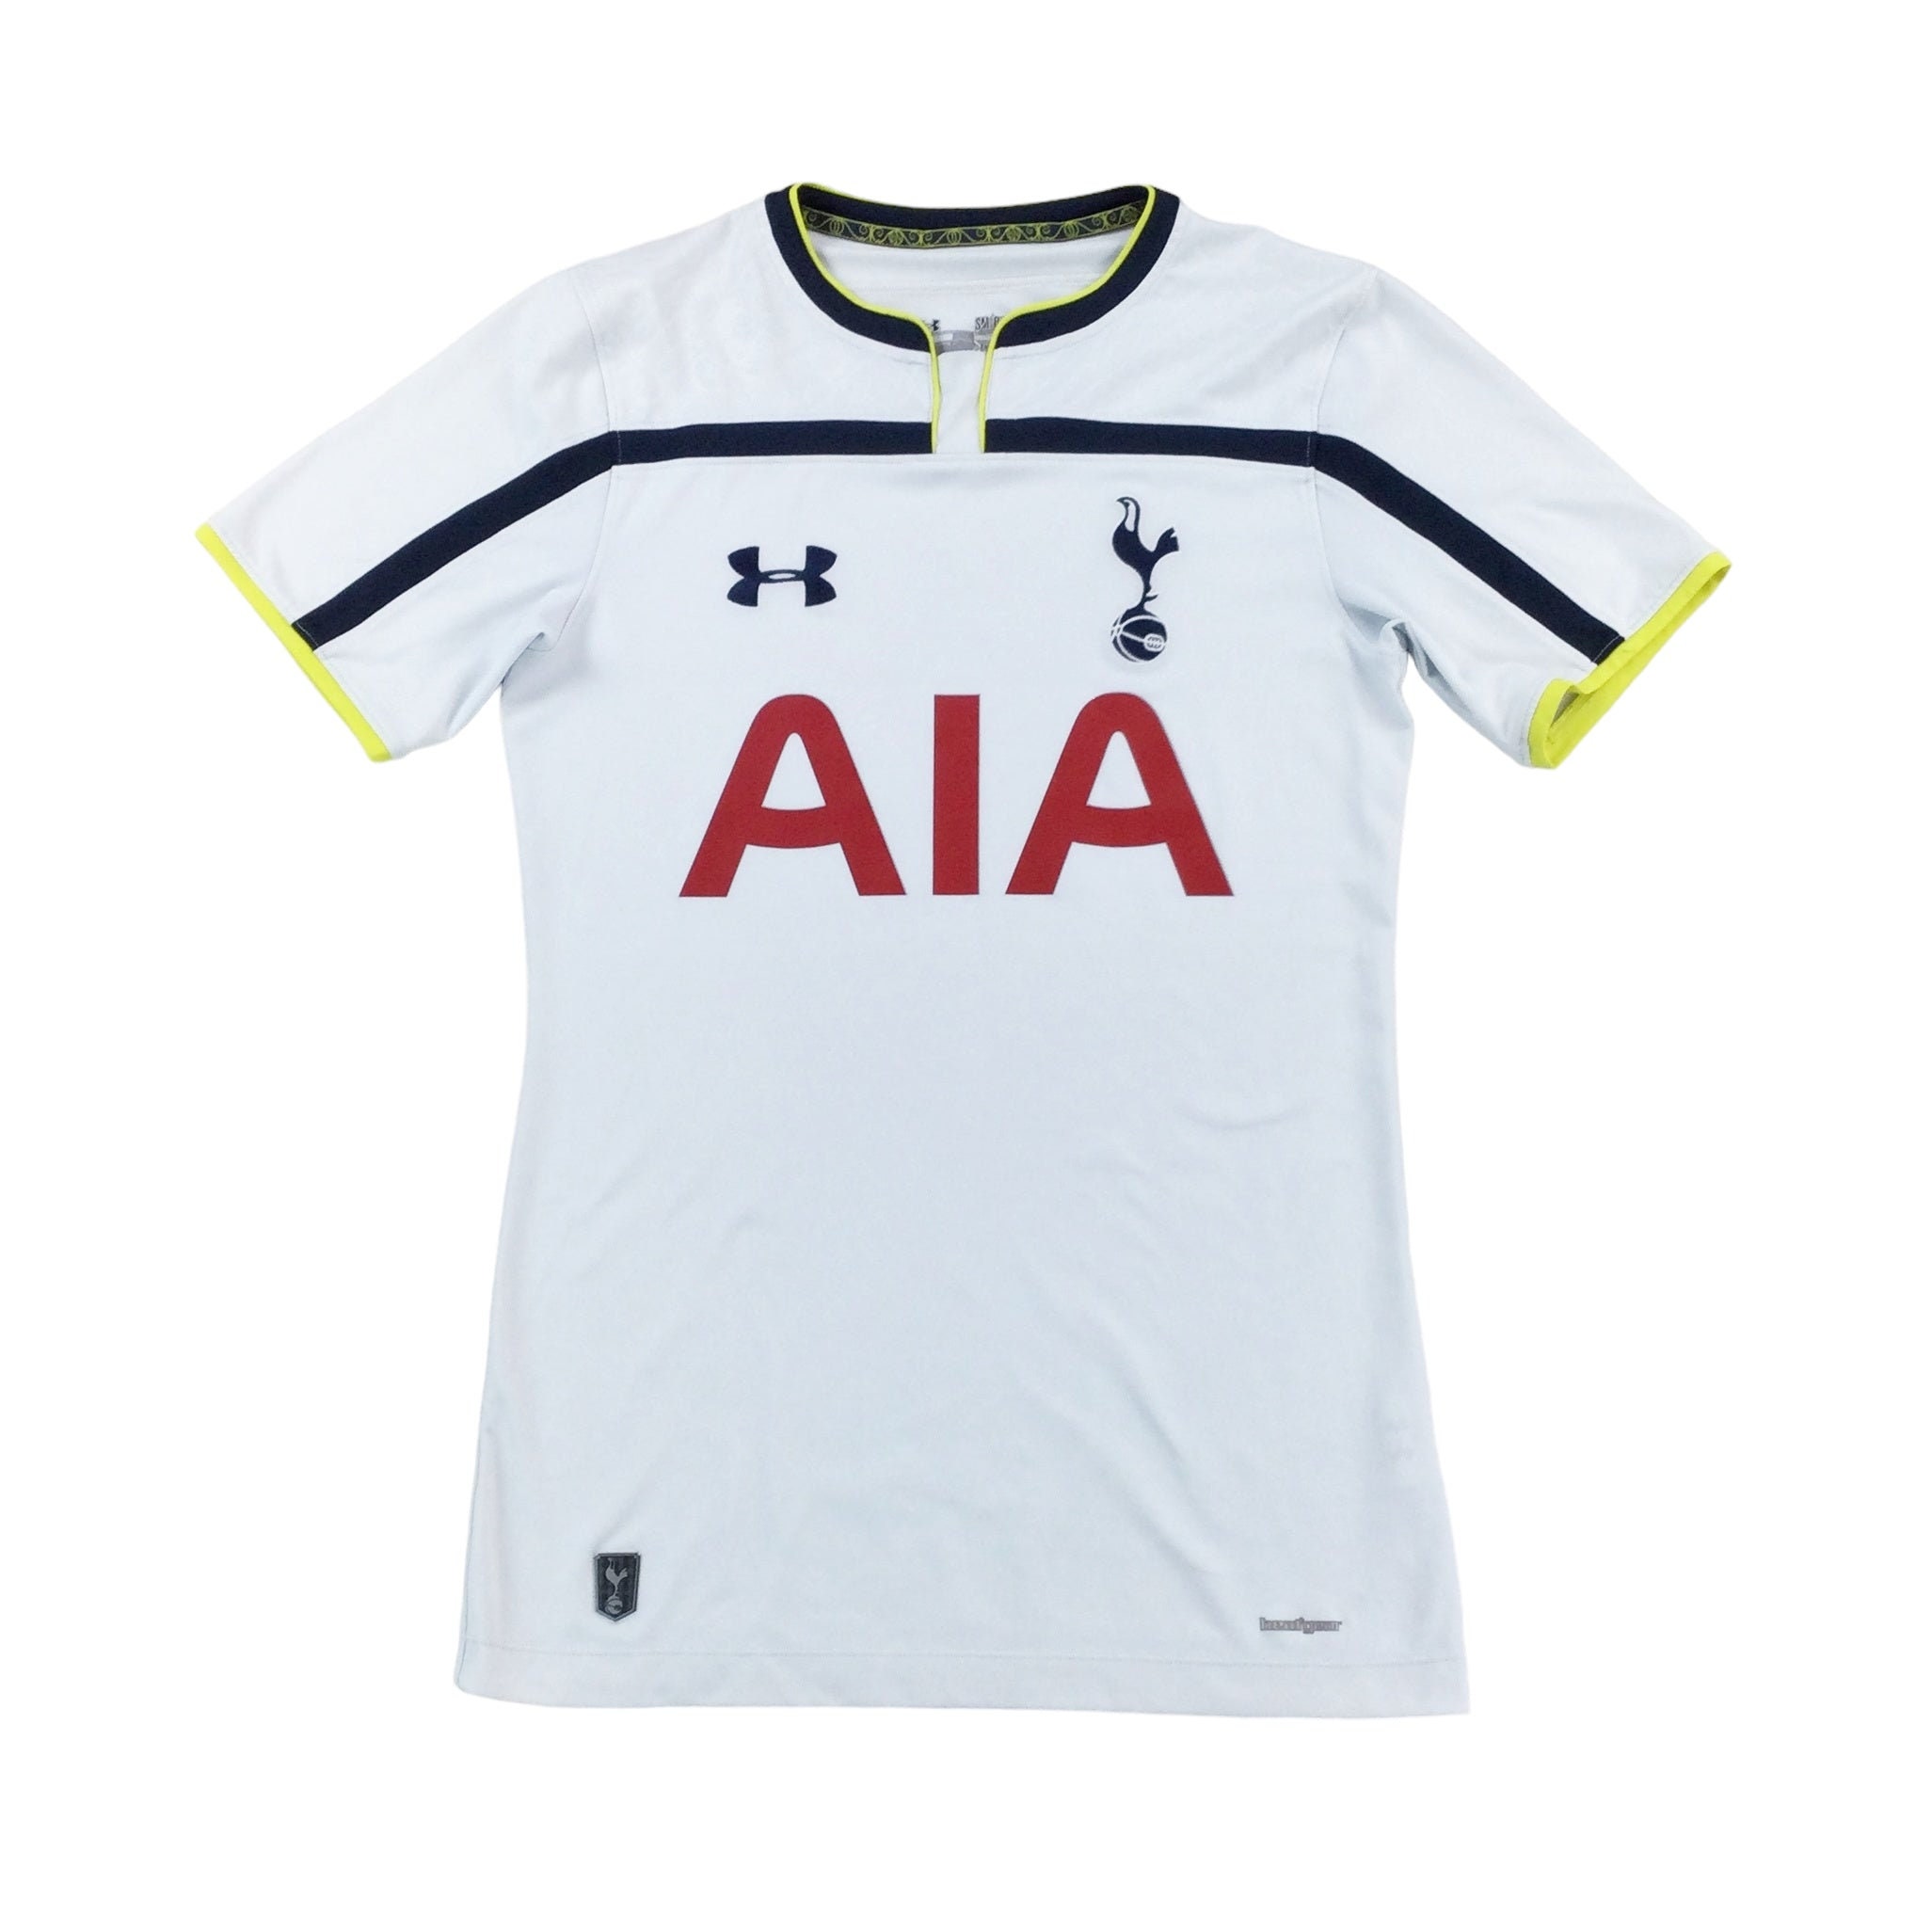 Buy Tottenham Hotspur Shirt Online In India -  India